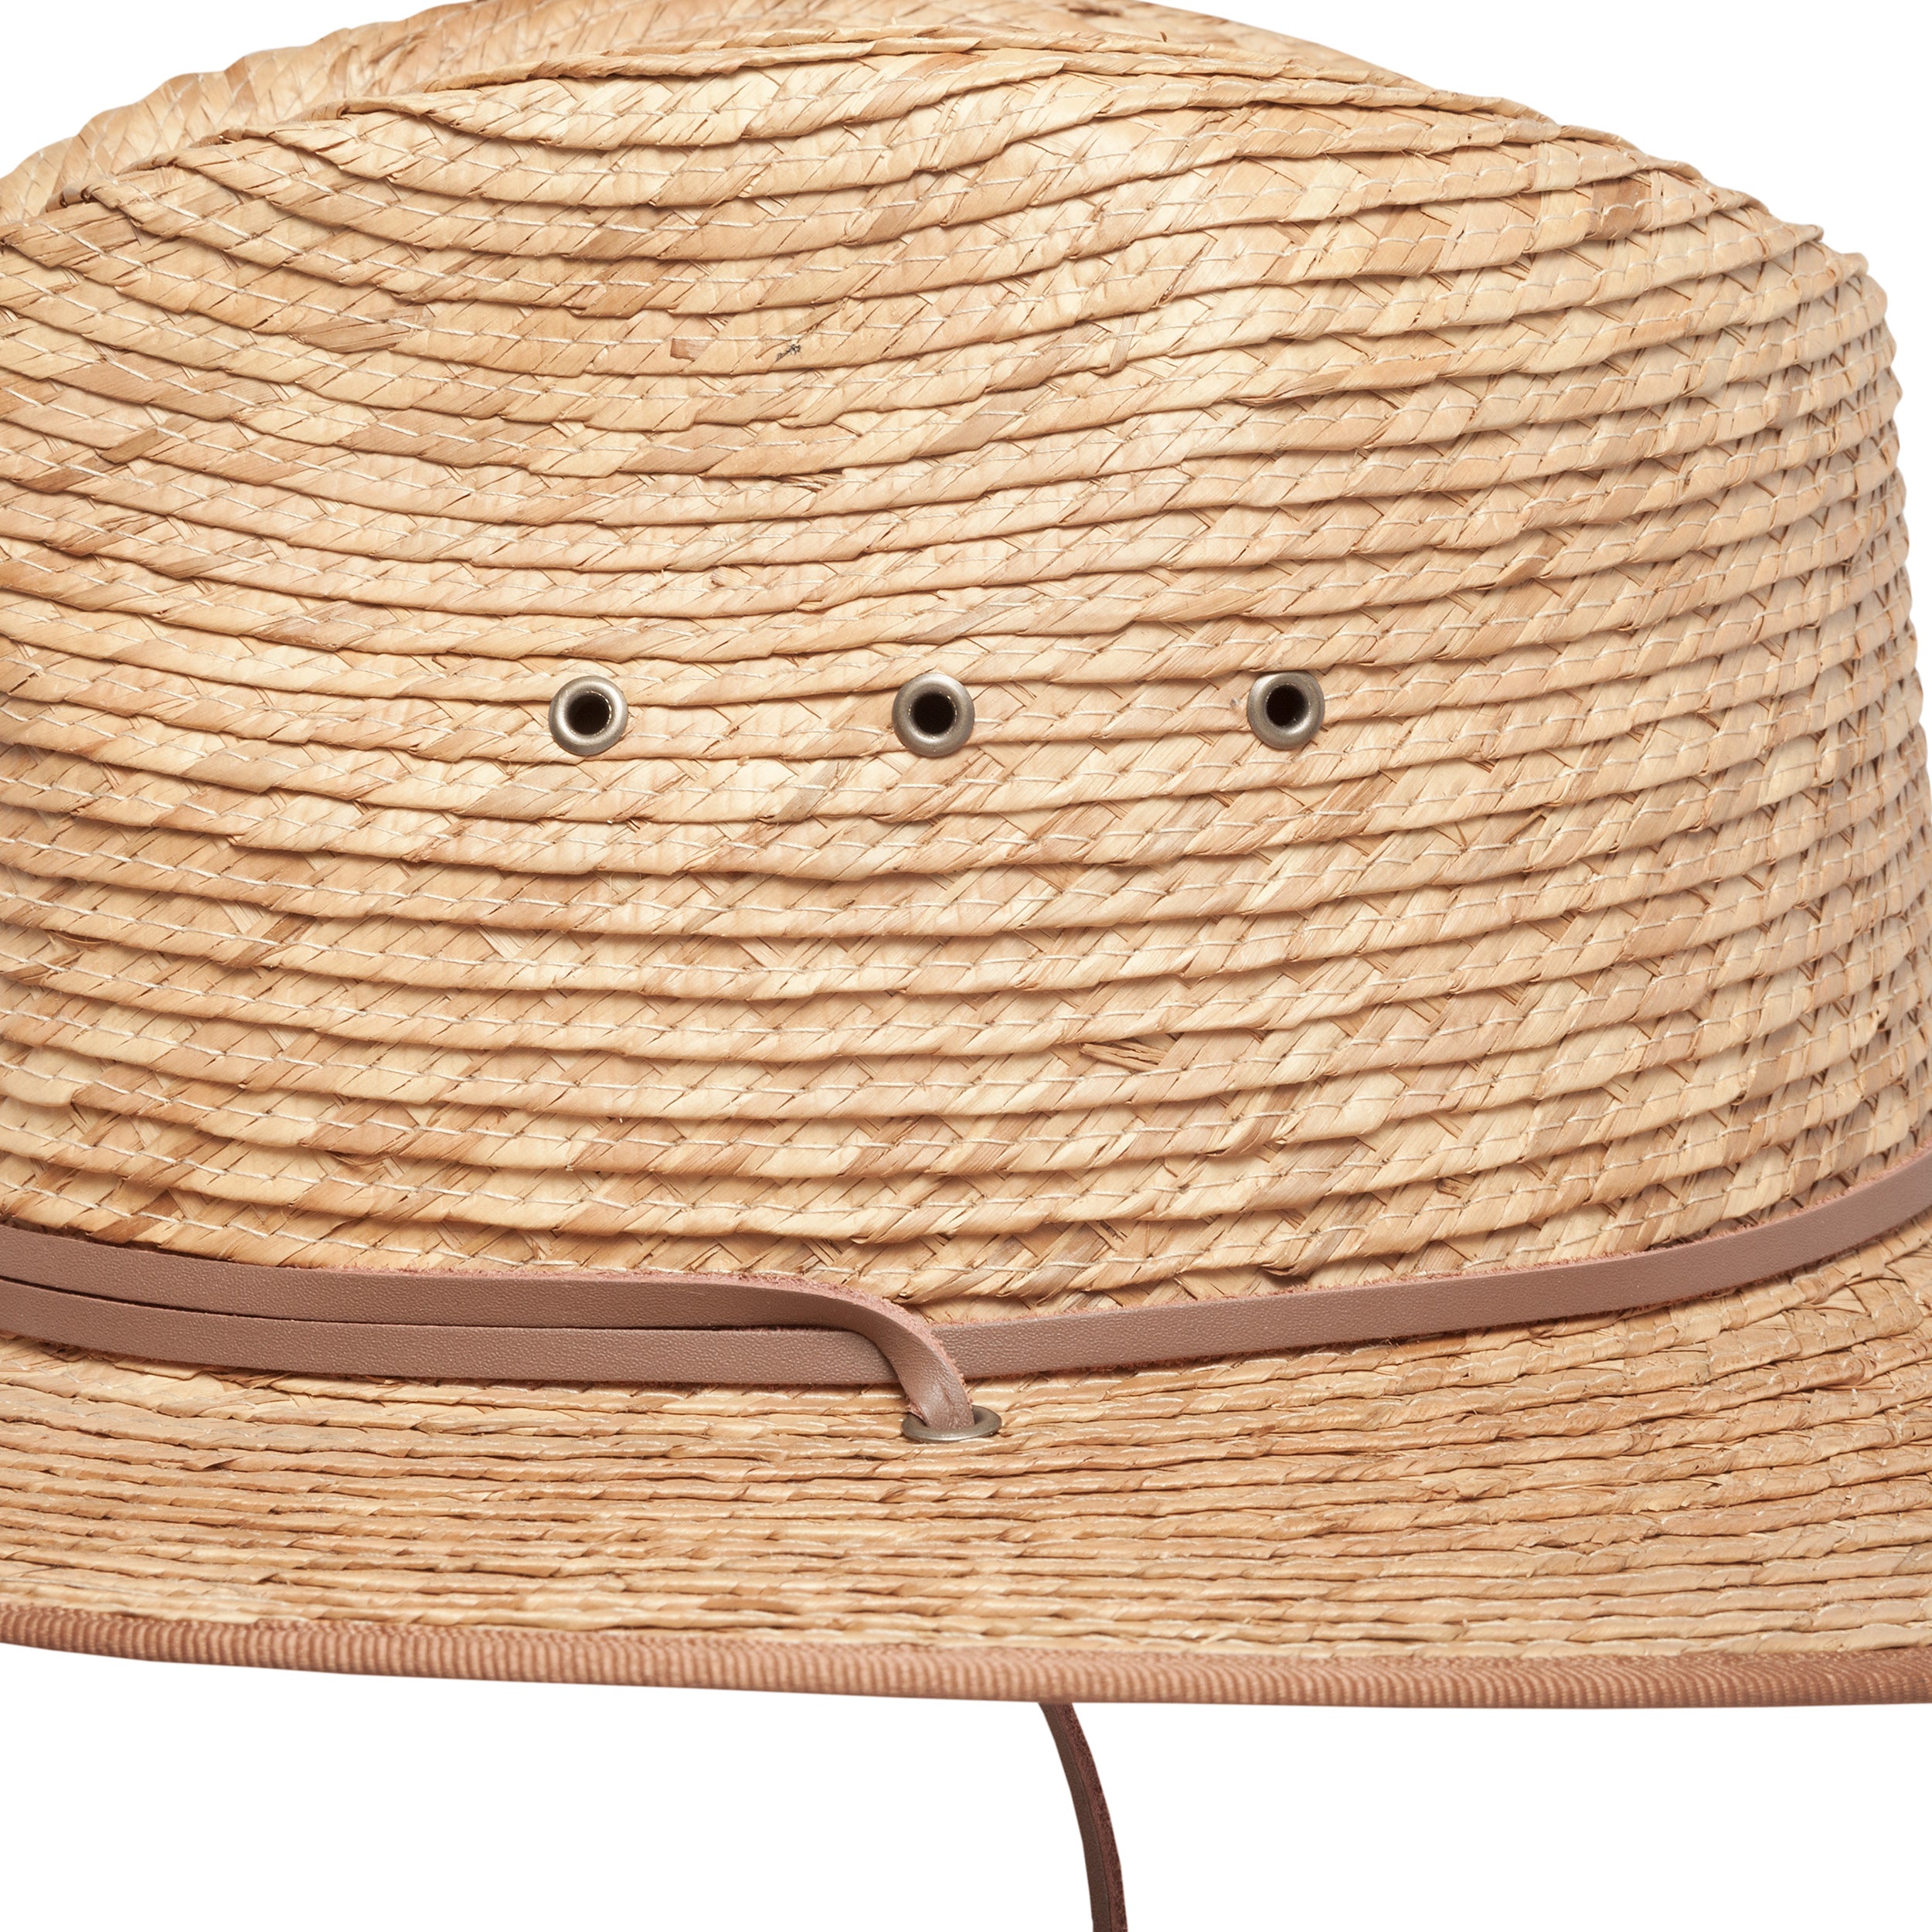 Islander Hat